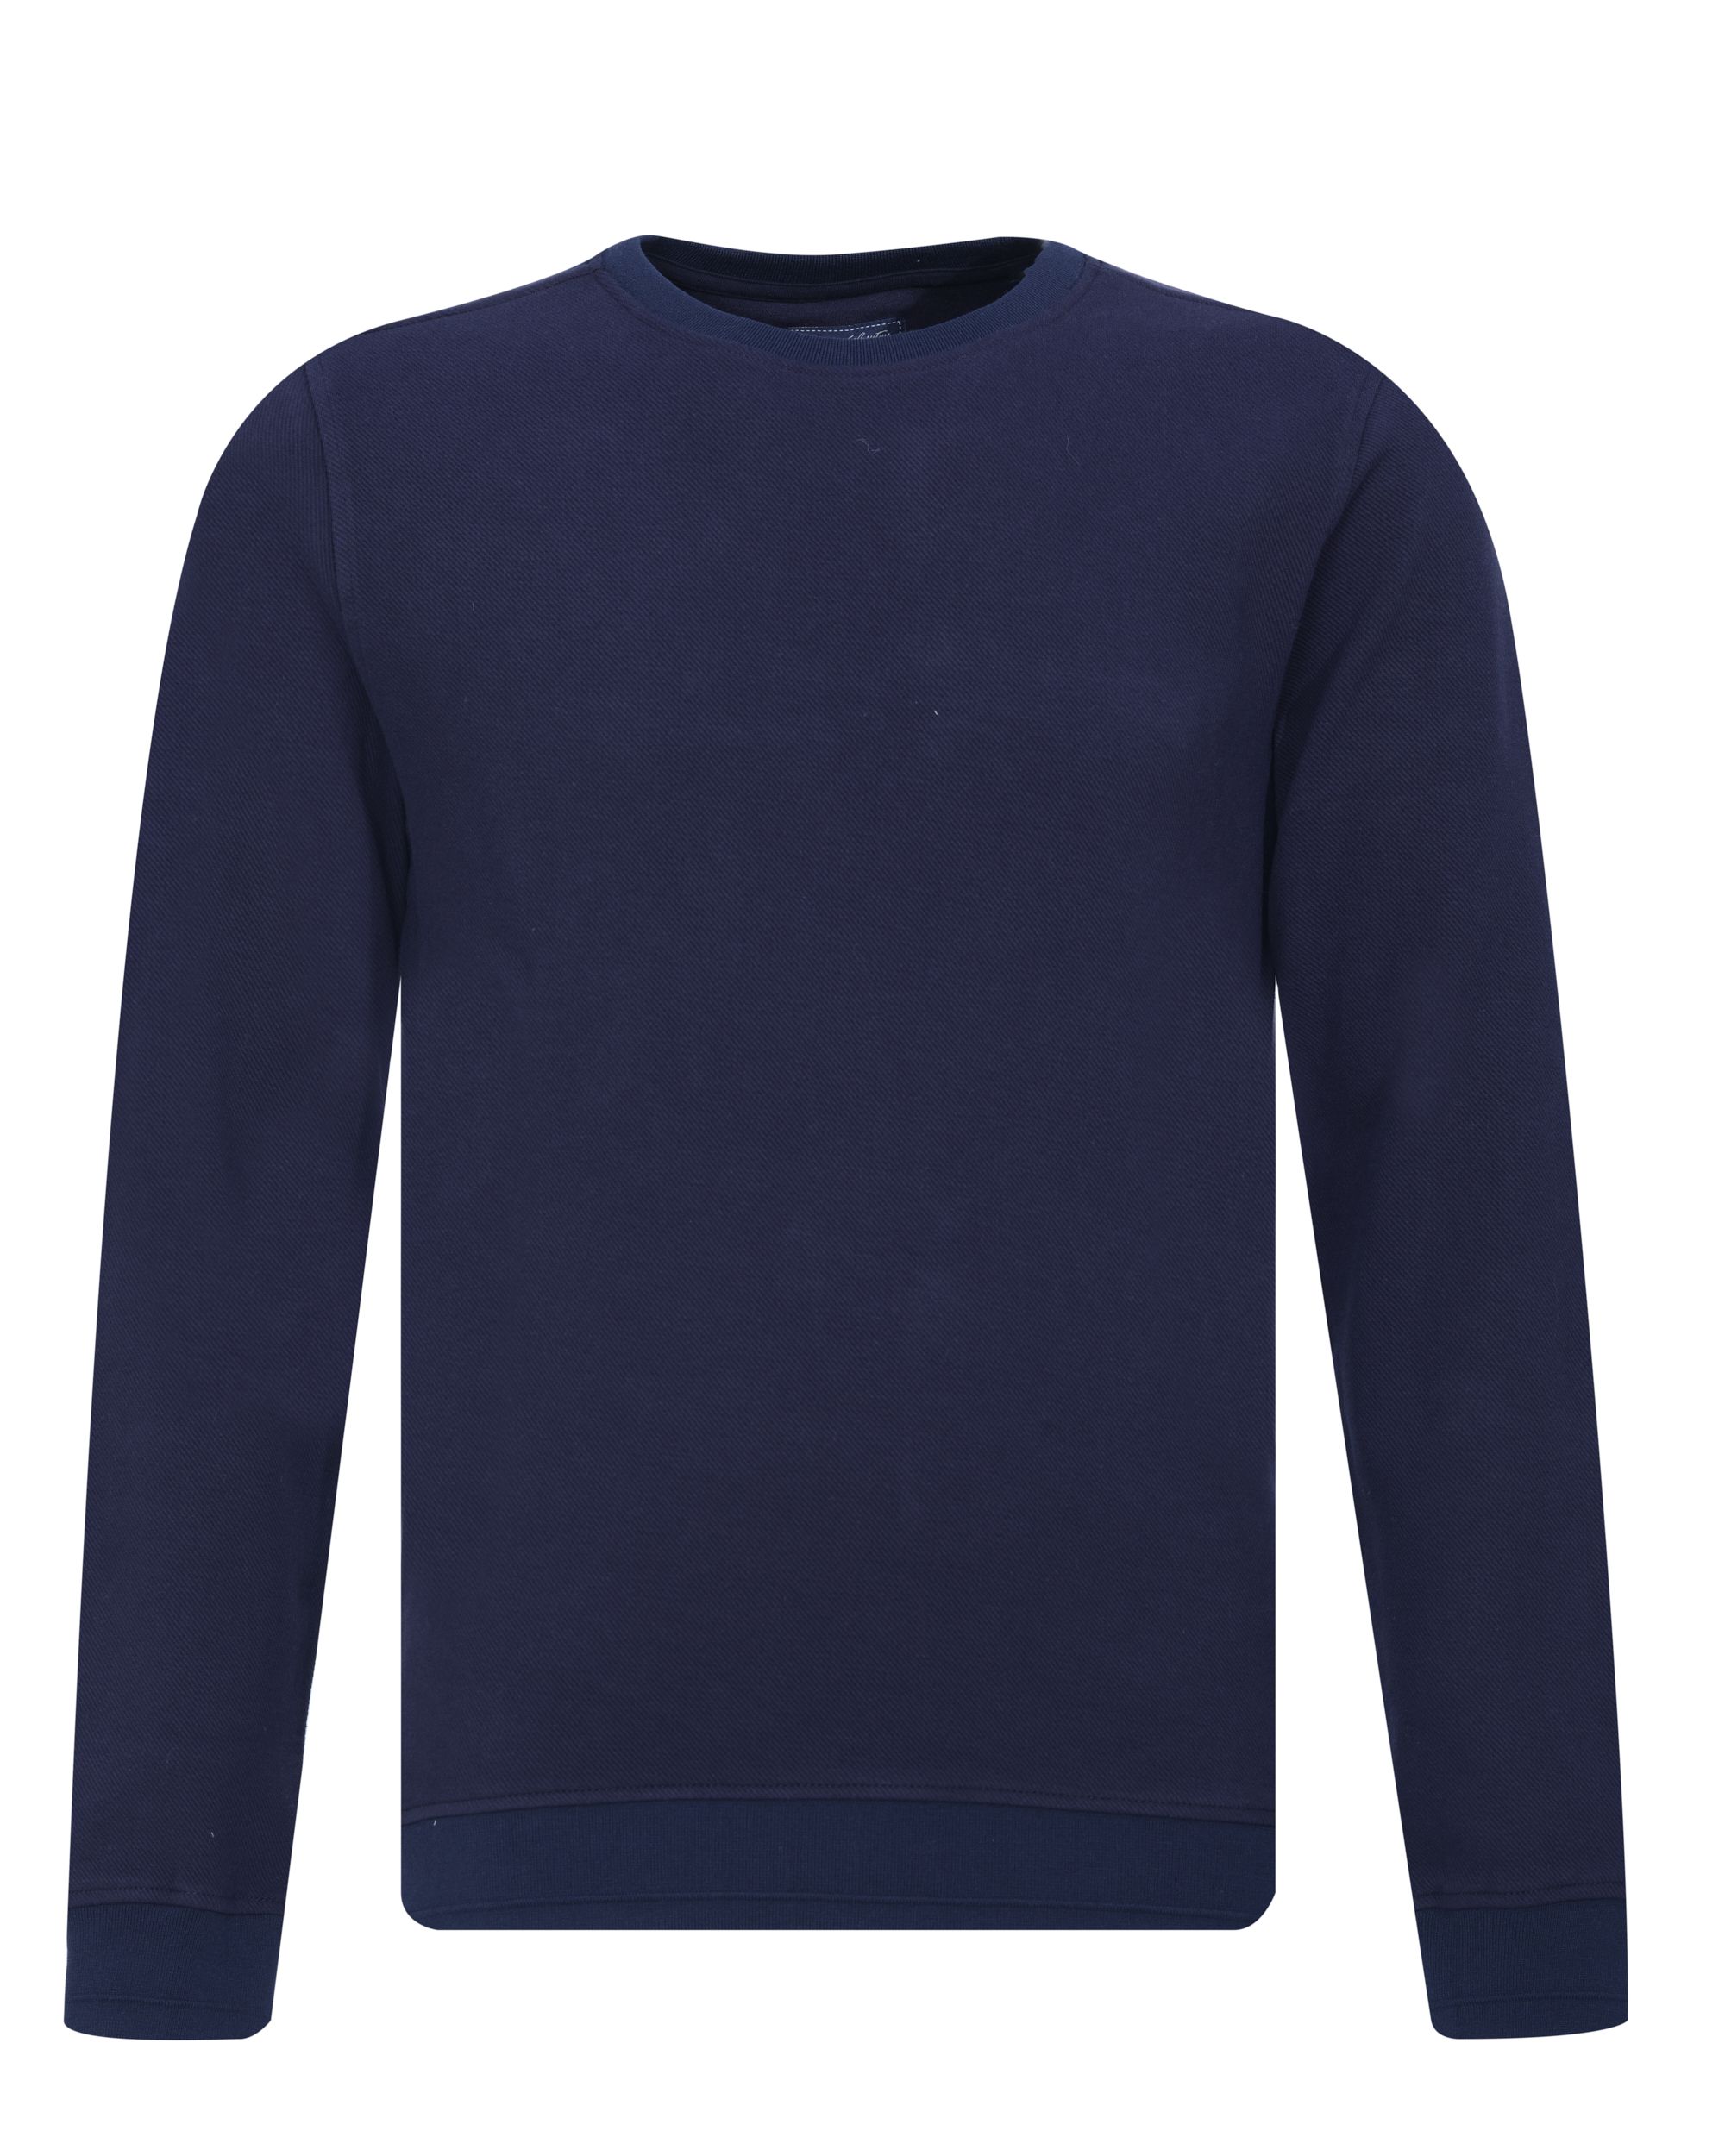 Campbell Sweater Navy uni 076971-002-L